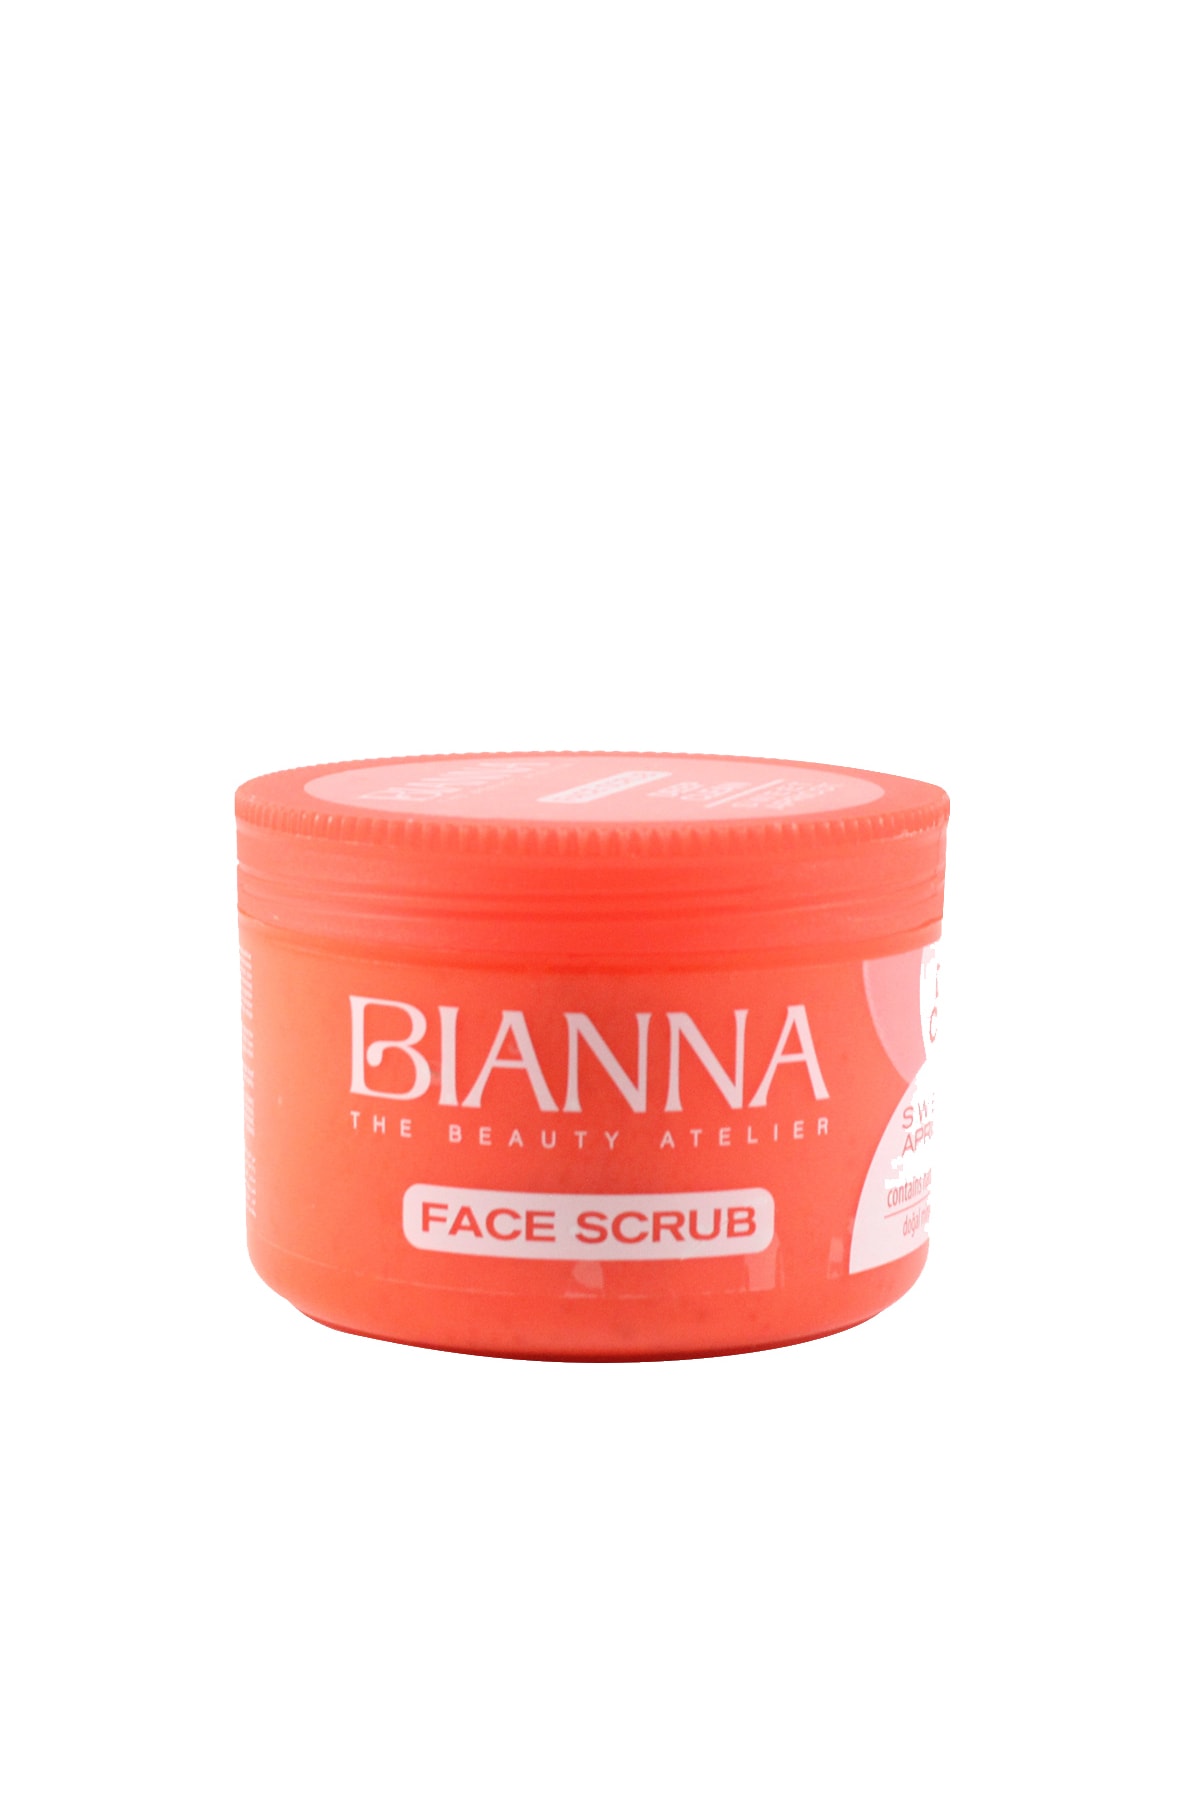 Bianna Face Scrub Sweet Apricot 300 ml X 4 Adet